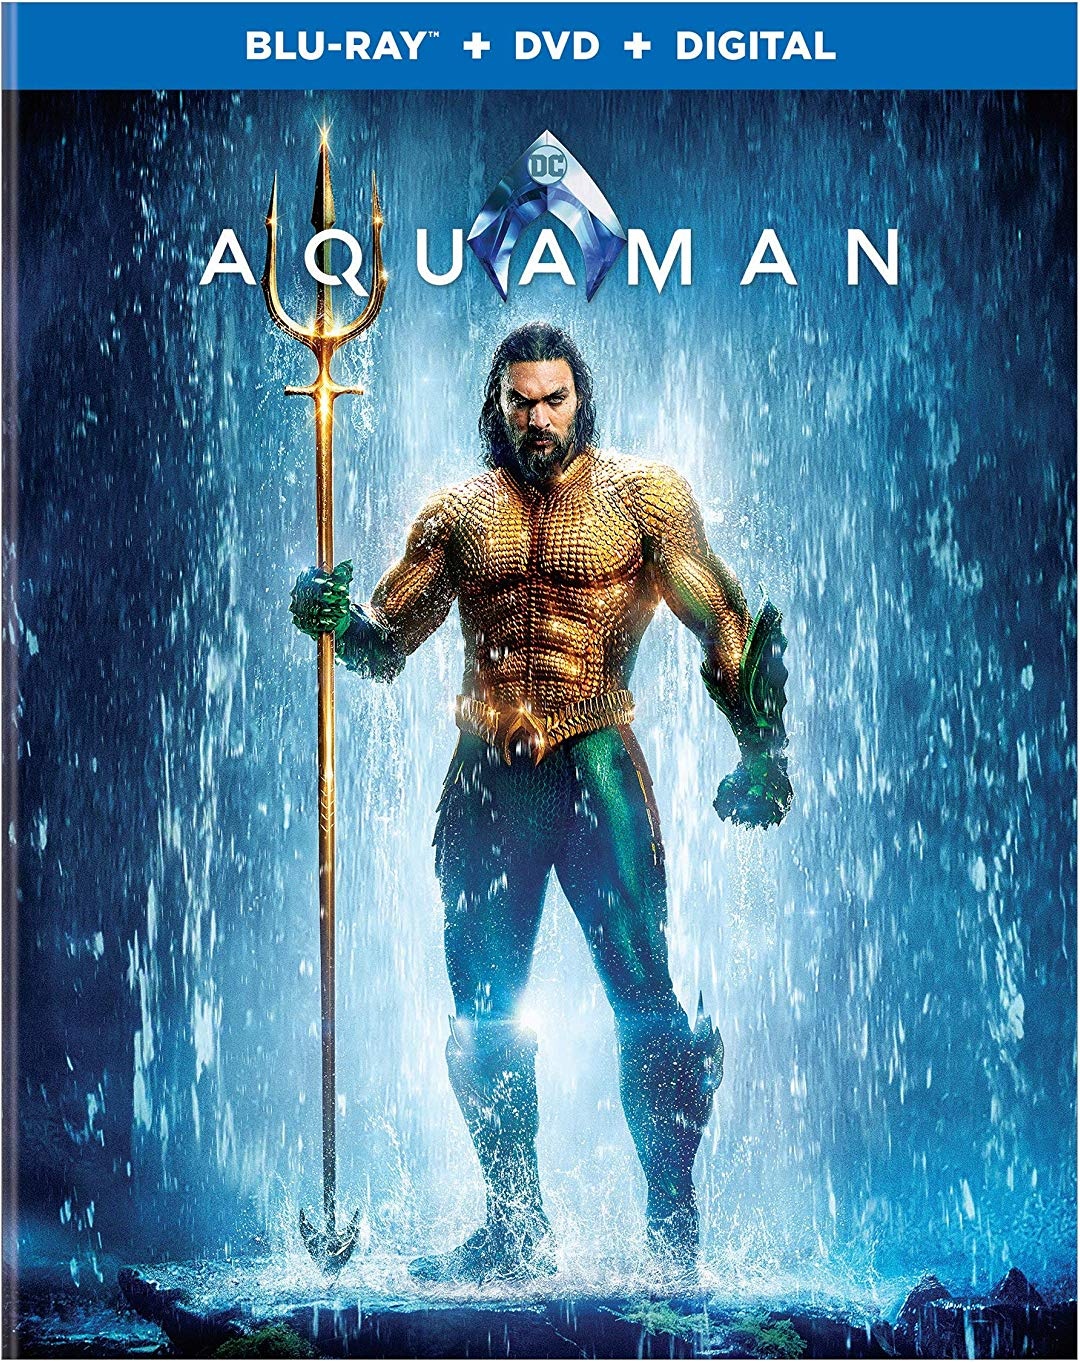 [海王].Aquaman.2018.TW.2D.BluRay.1080p.AVC.TrueHD.7.1-TTG     46.31G-2.jpg